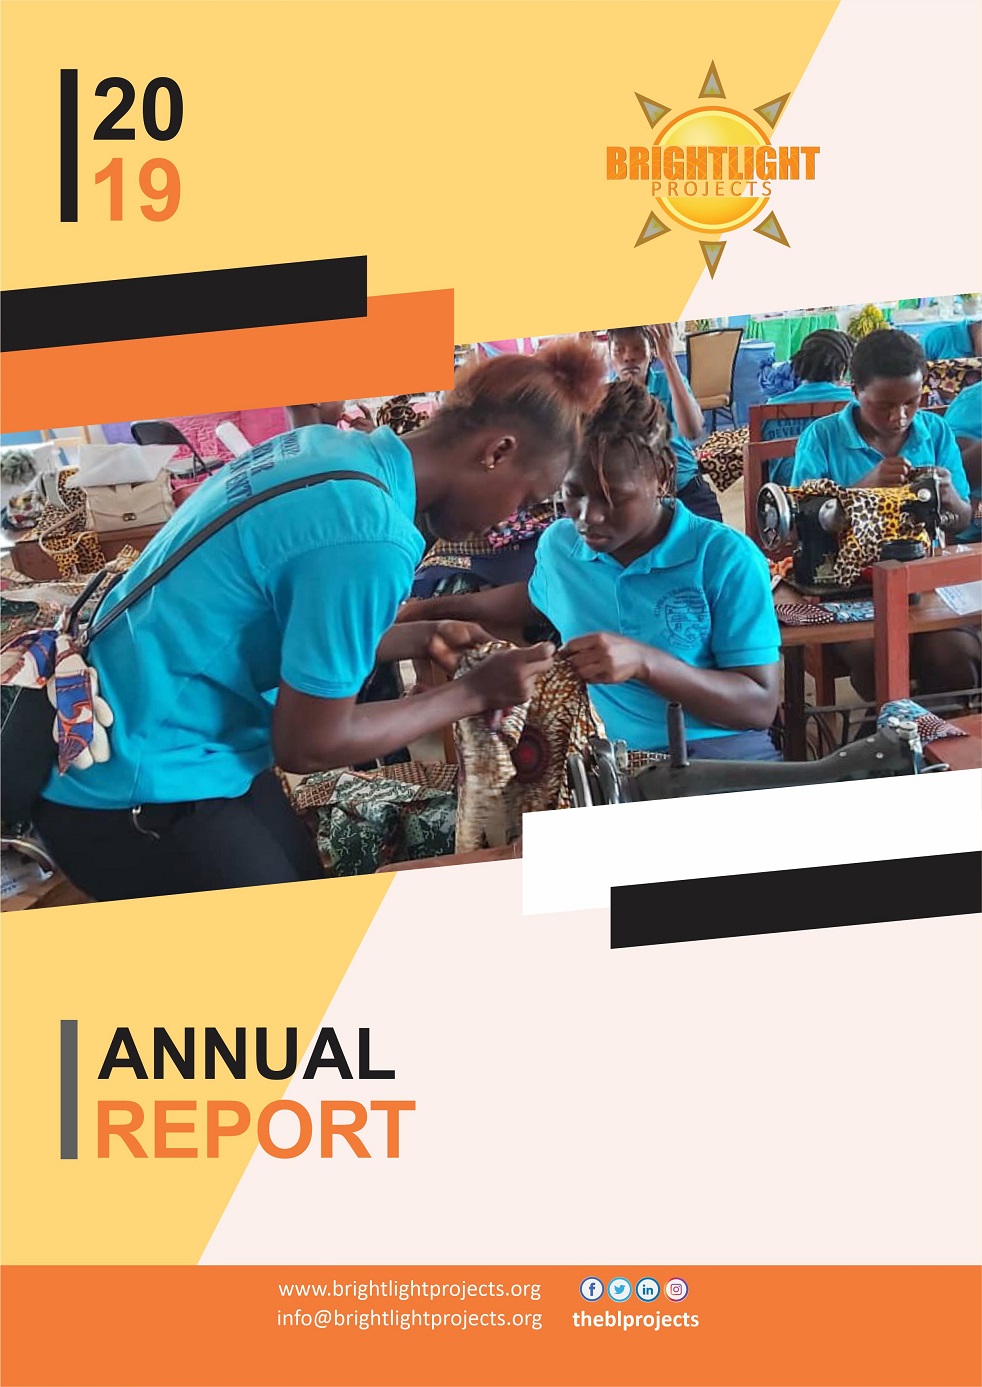  2019 Annual Report